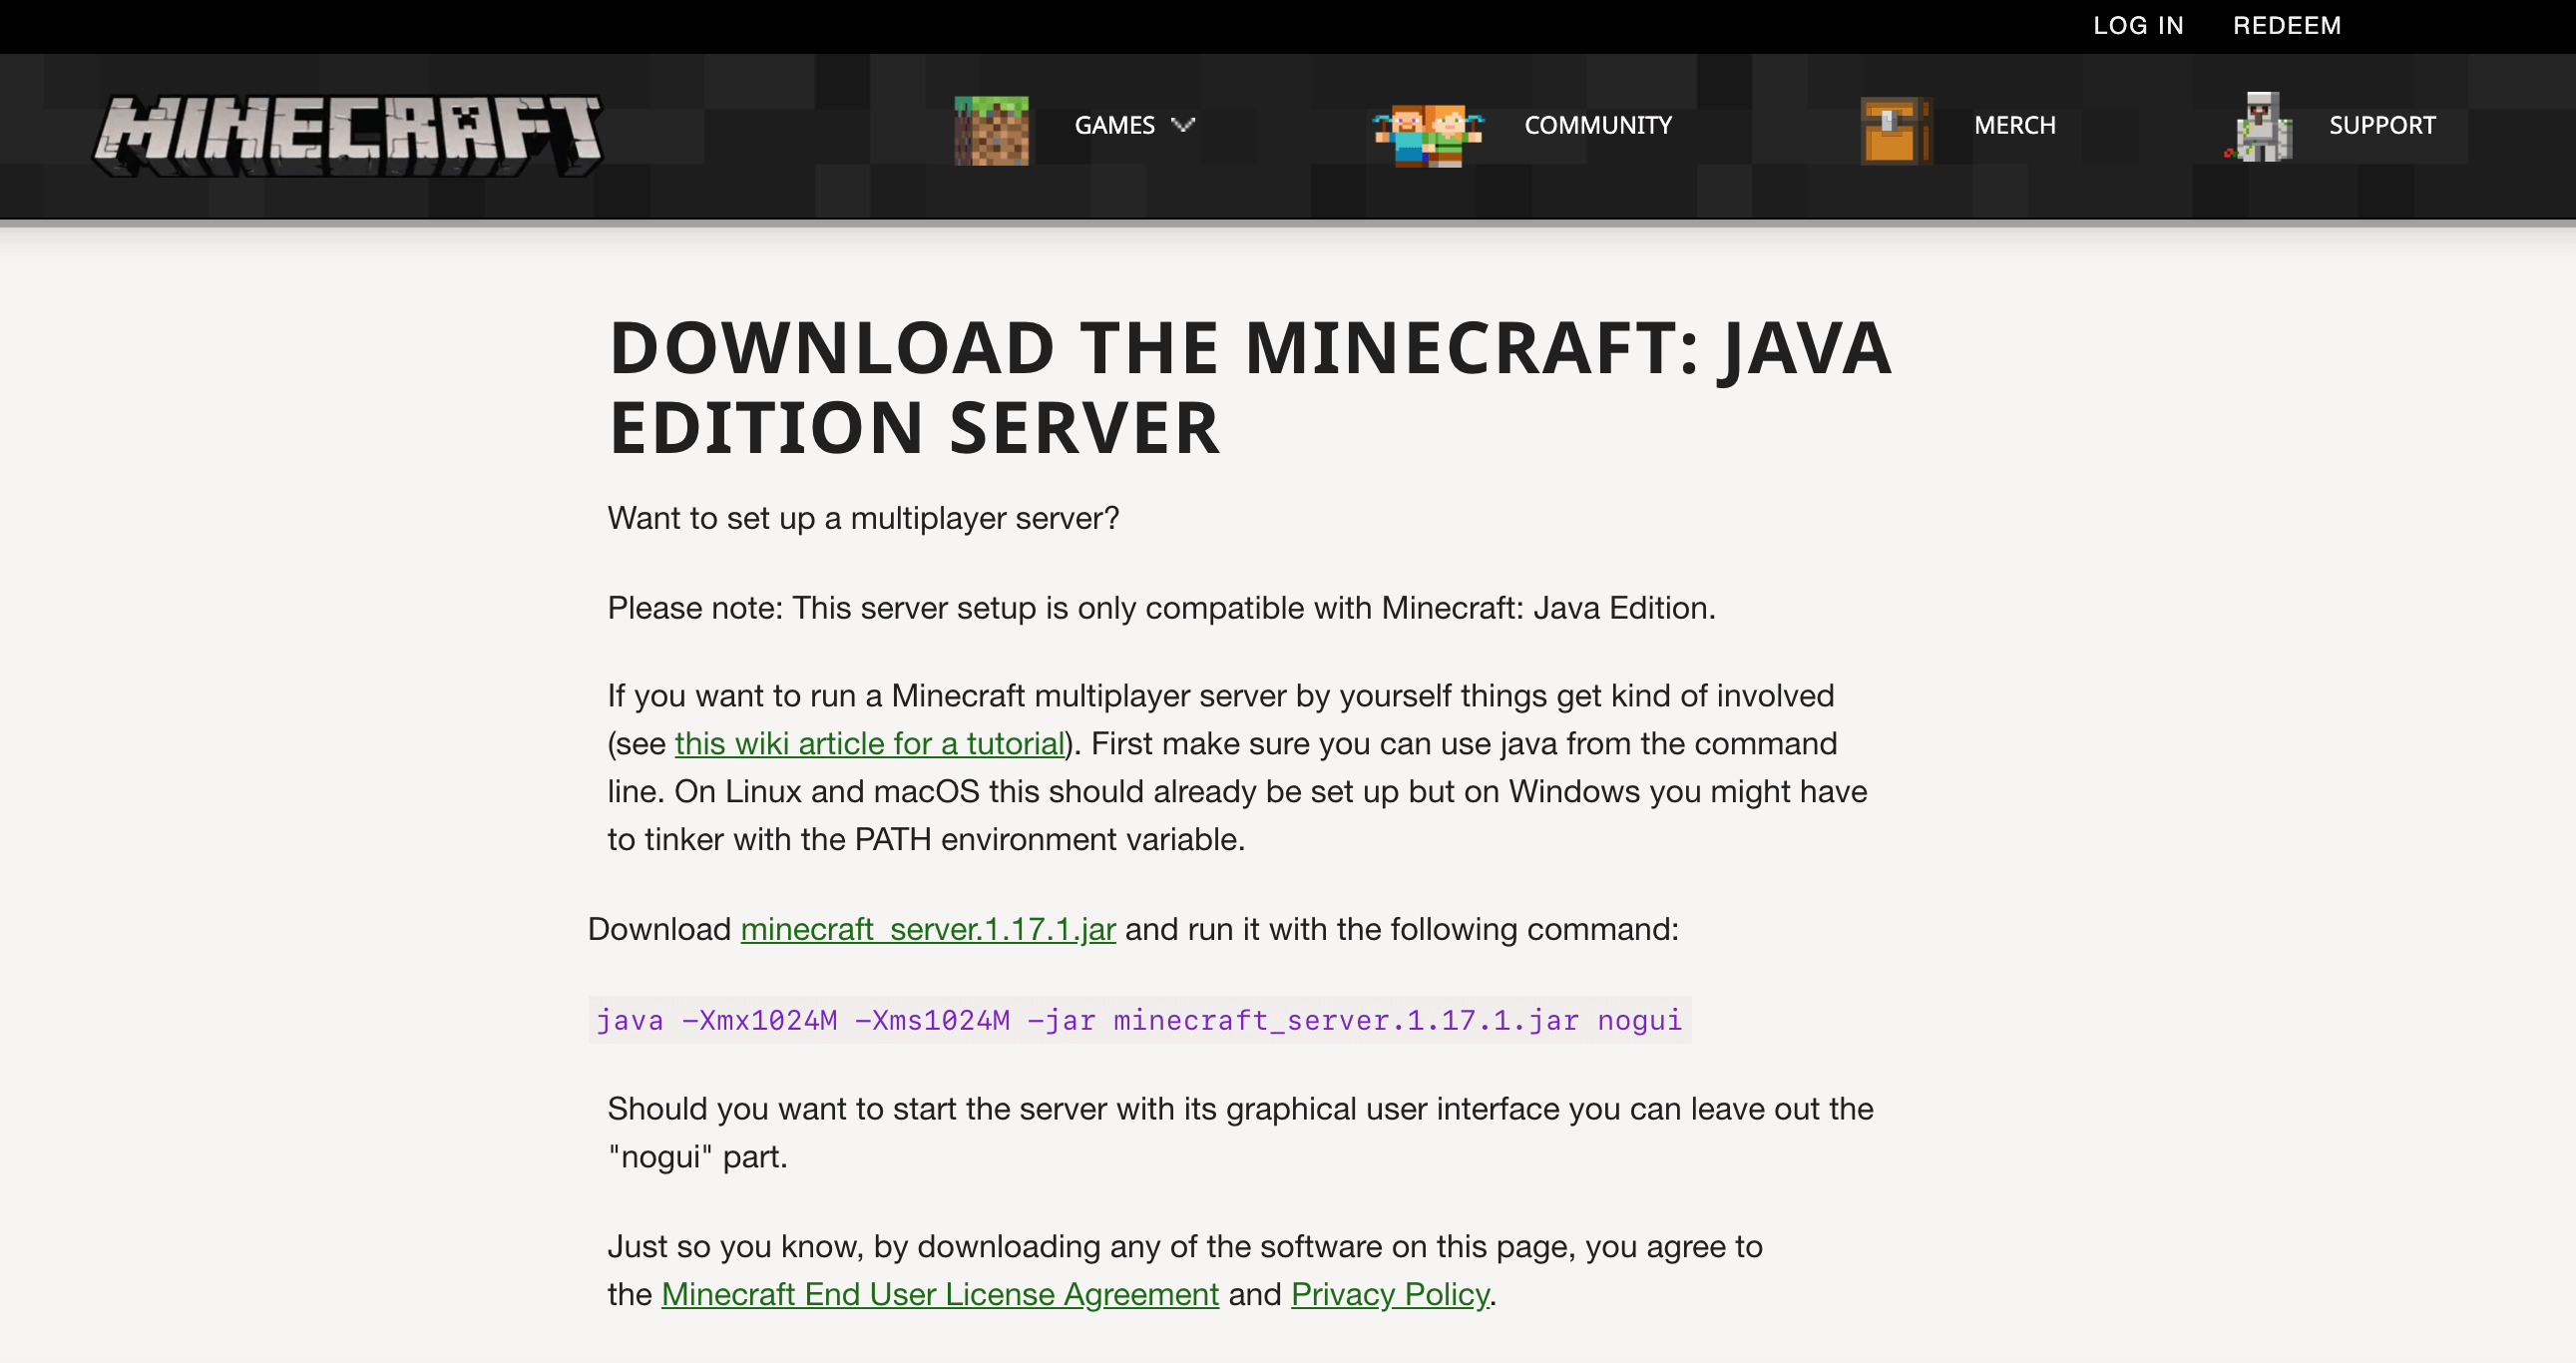 How to install Minecraft Server on CentOS [Guide]